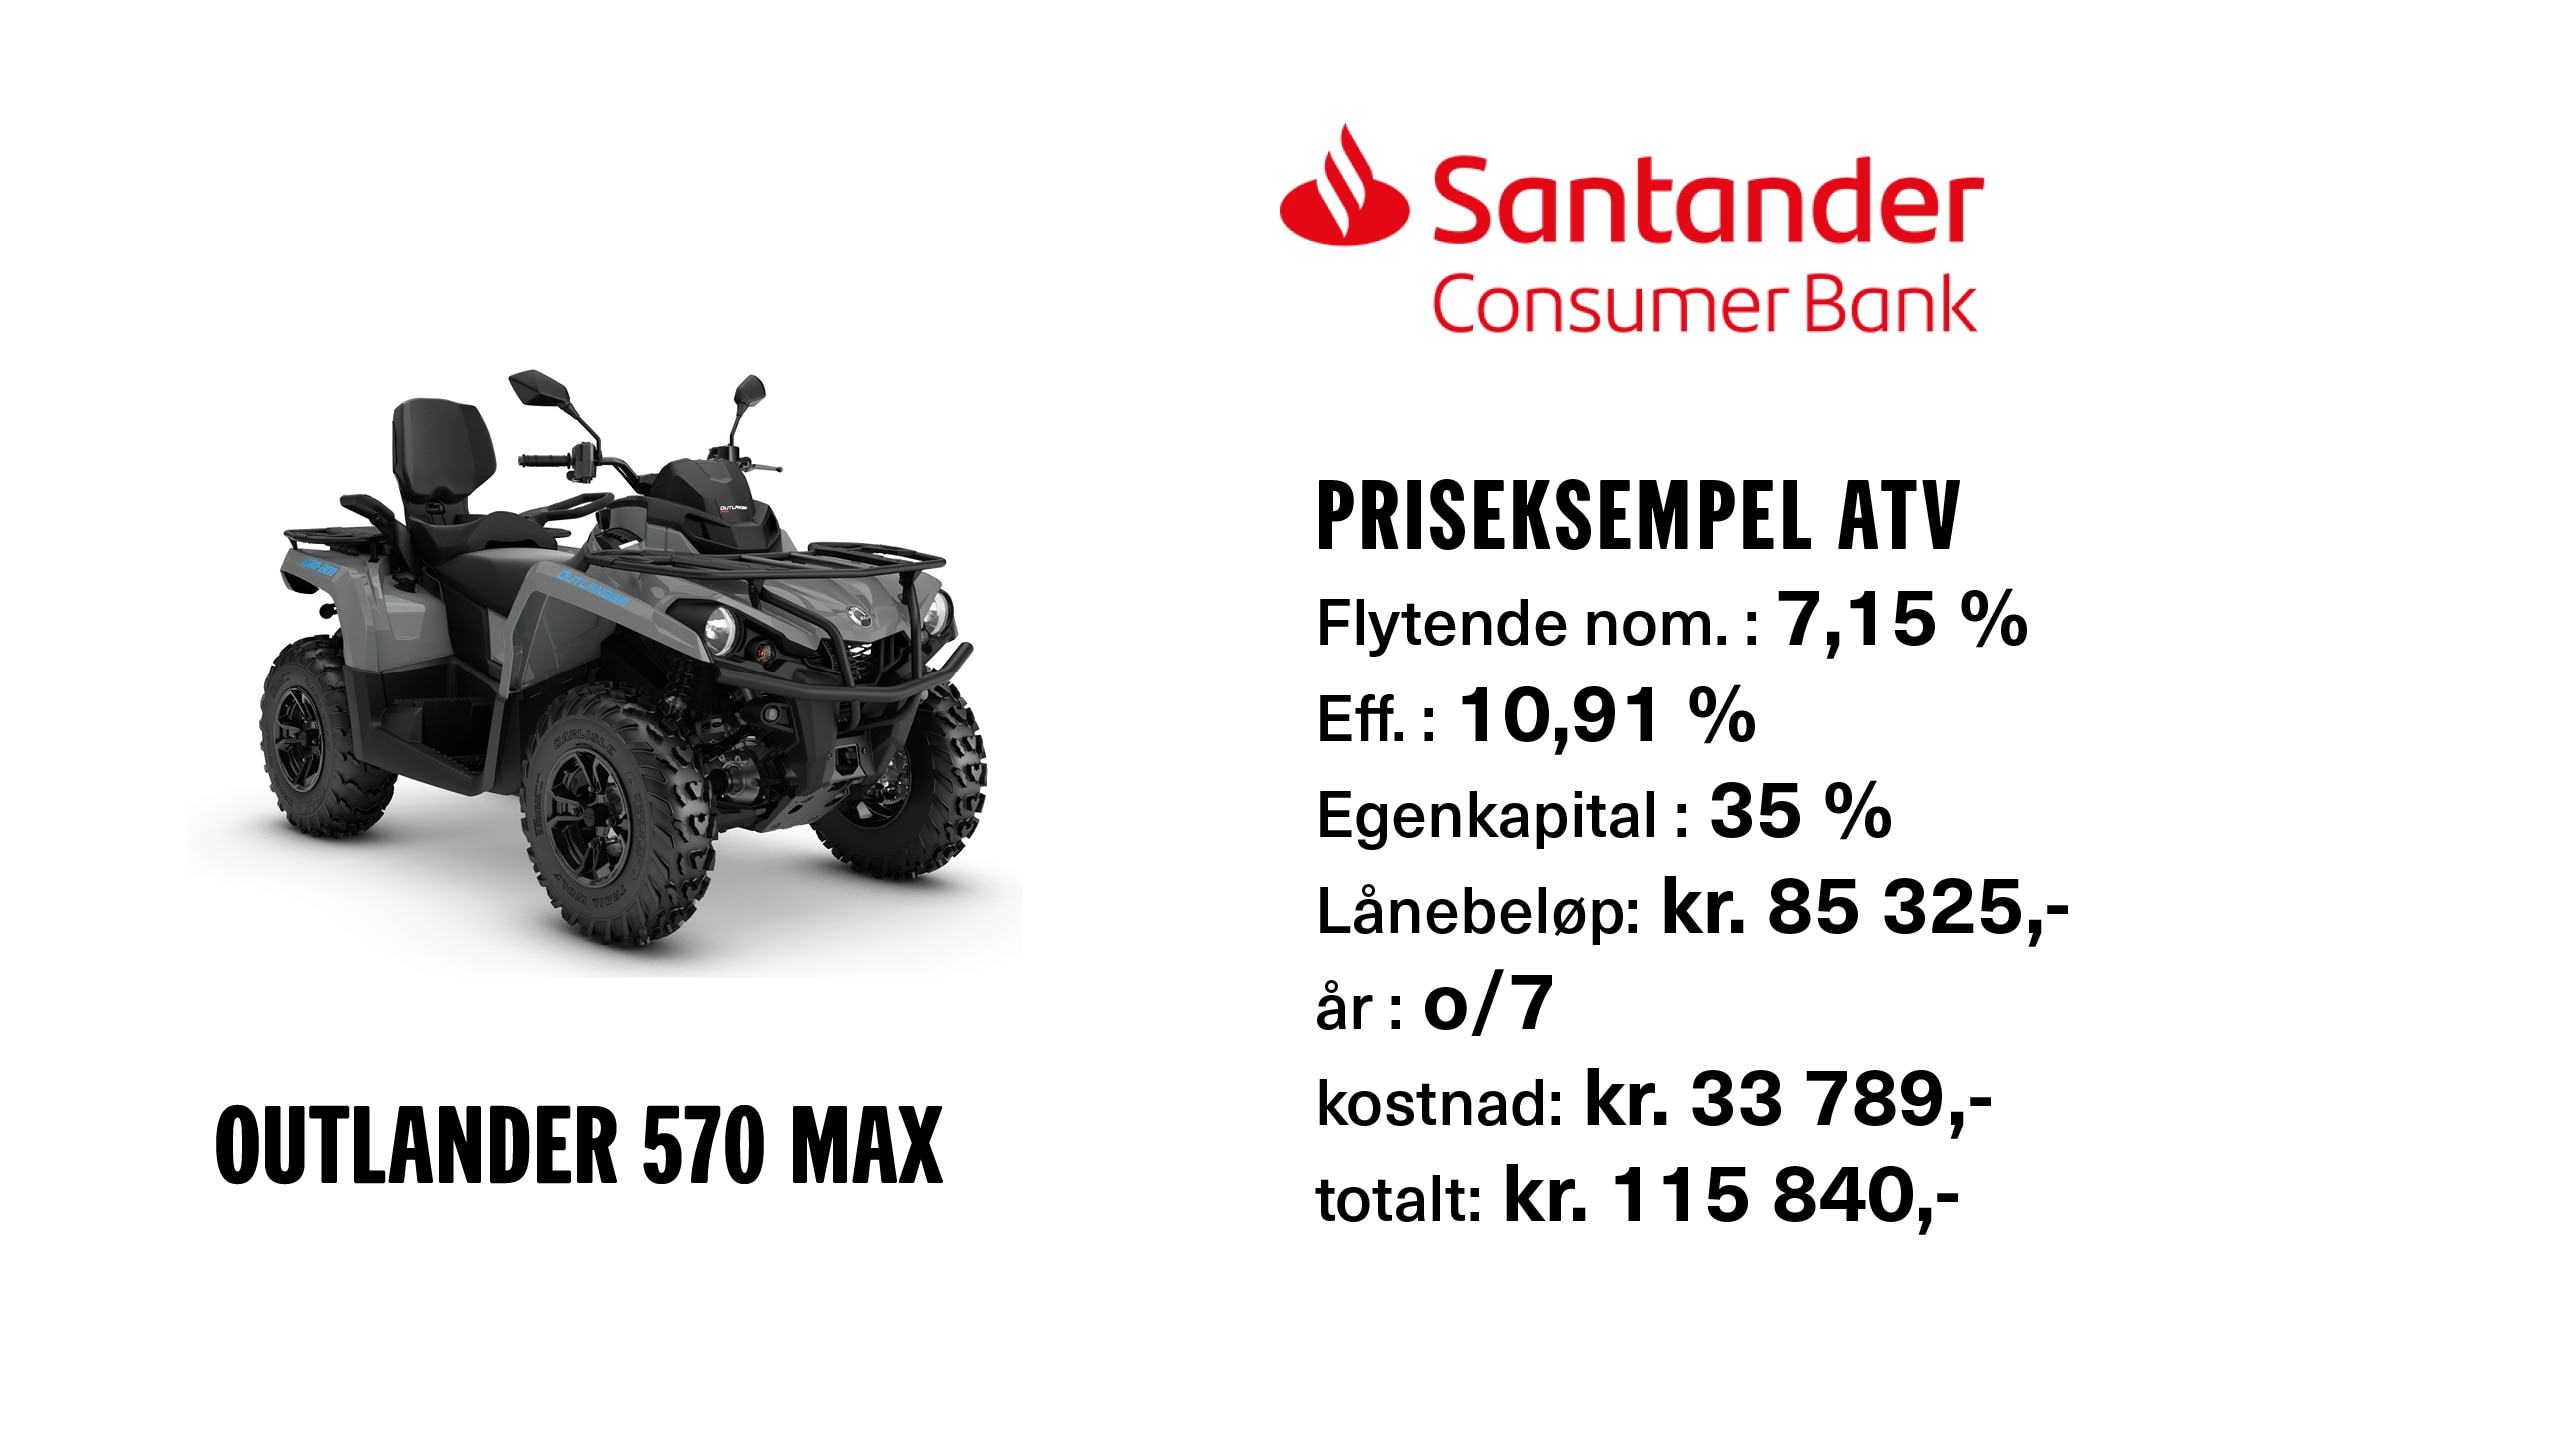 Priseksempel ATV lån fra Santander Consumer Bank: 7,15 %  flytende nom./ 10,91 % eff. 35 % egenkapital, lånebeløp: kr. 85 325,- o/7 år, kostnad: kr. 33 789,-  totalt: kr. 115 840,-"